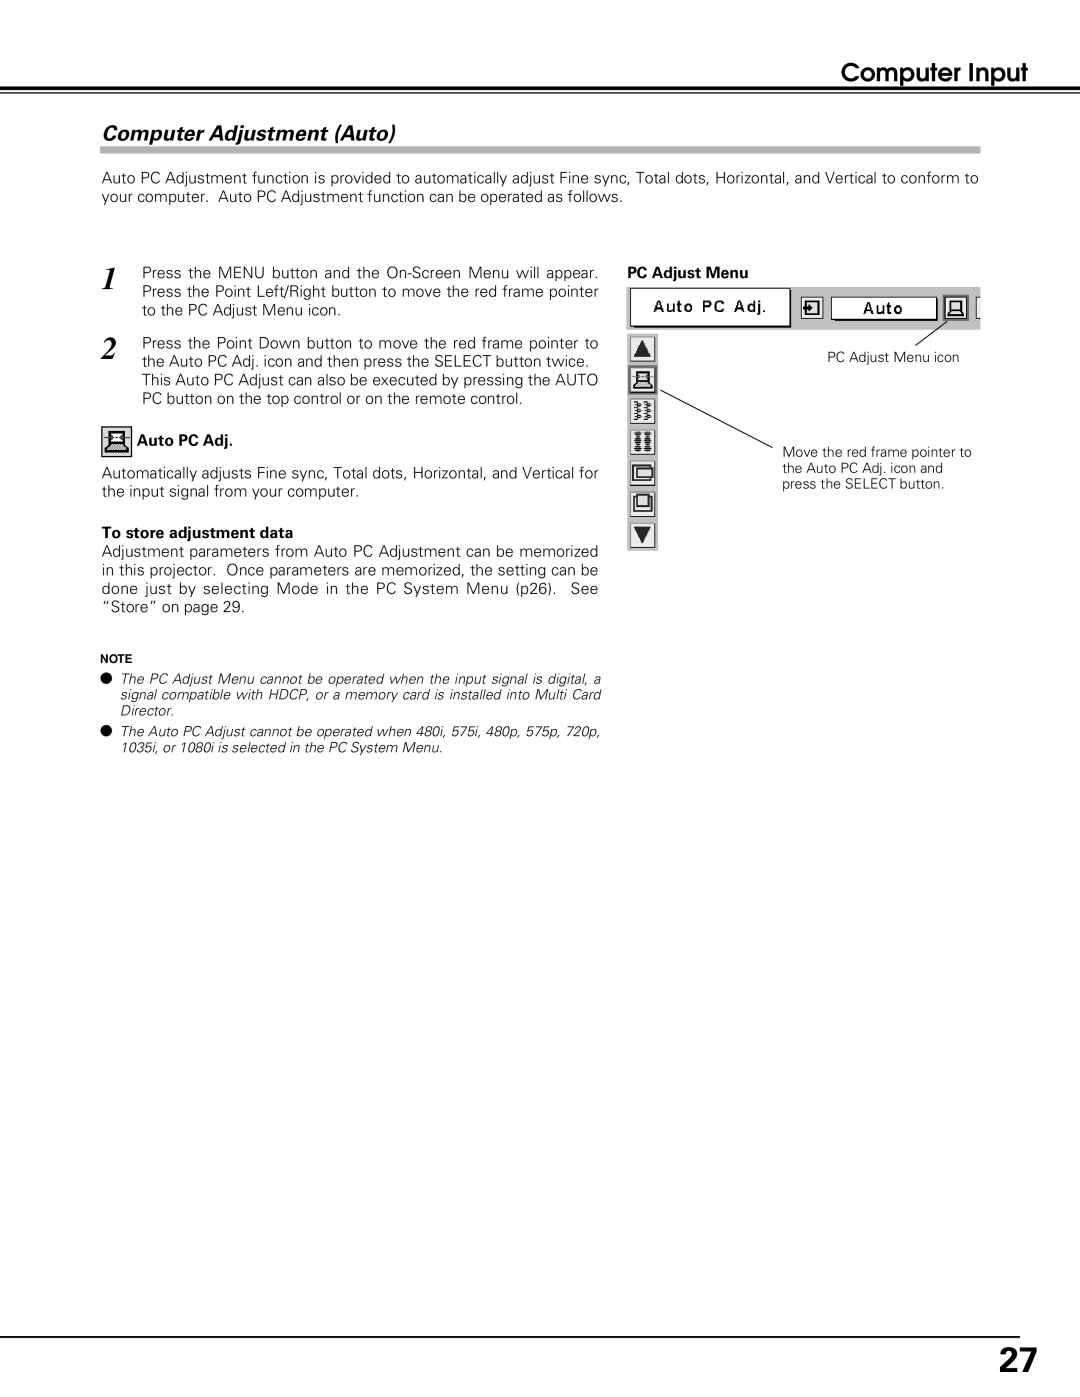 Black Box LC-XE10 instruction manual Computer Adjustment Auto, Computer Input, Auto PC Adj, To store adjustment data 